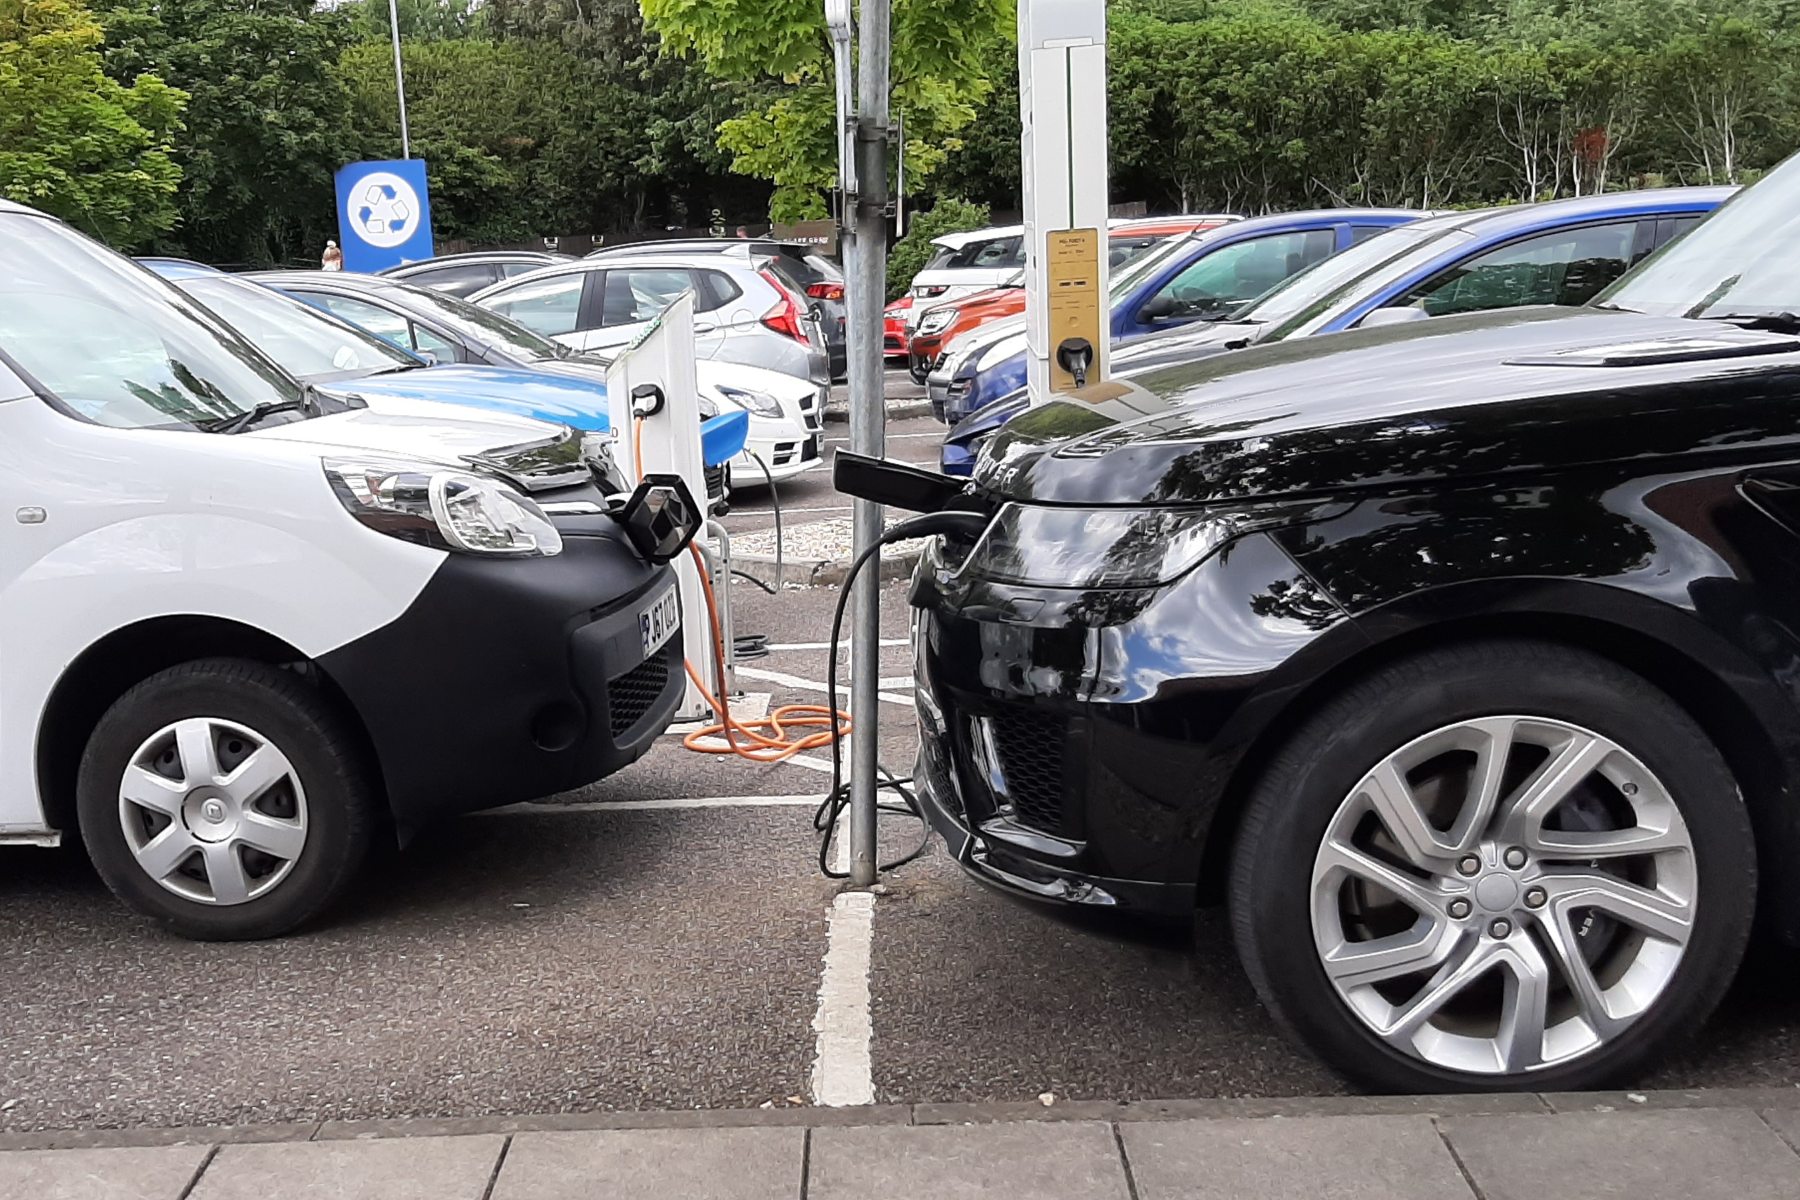 Cars recharging at supermarket - Gareth Herincx